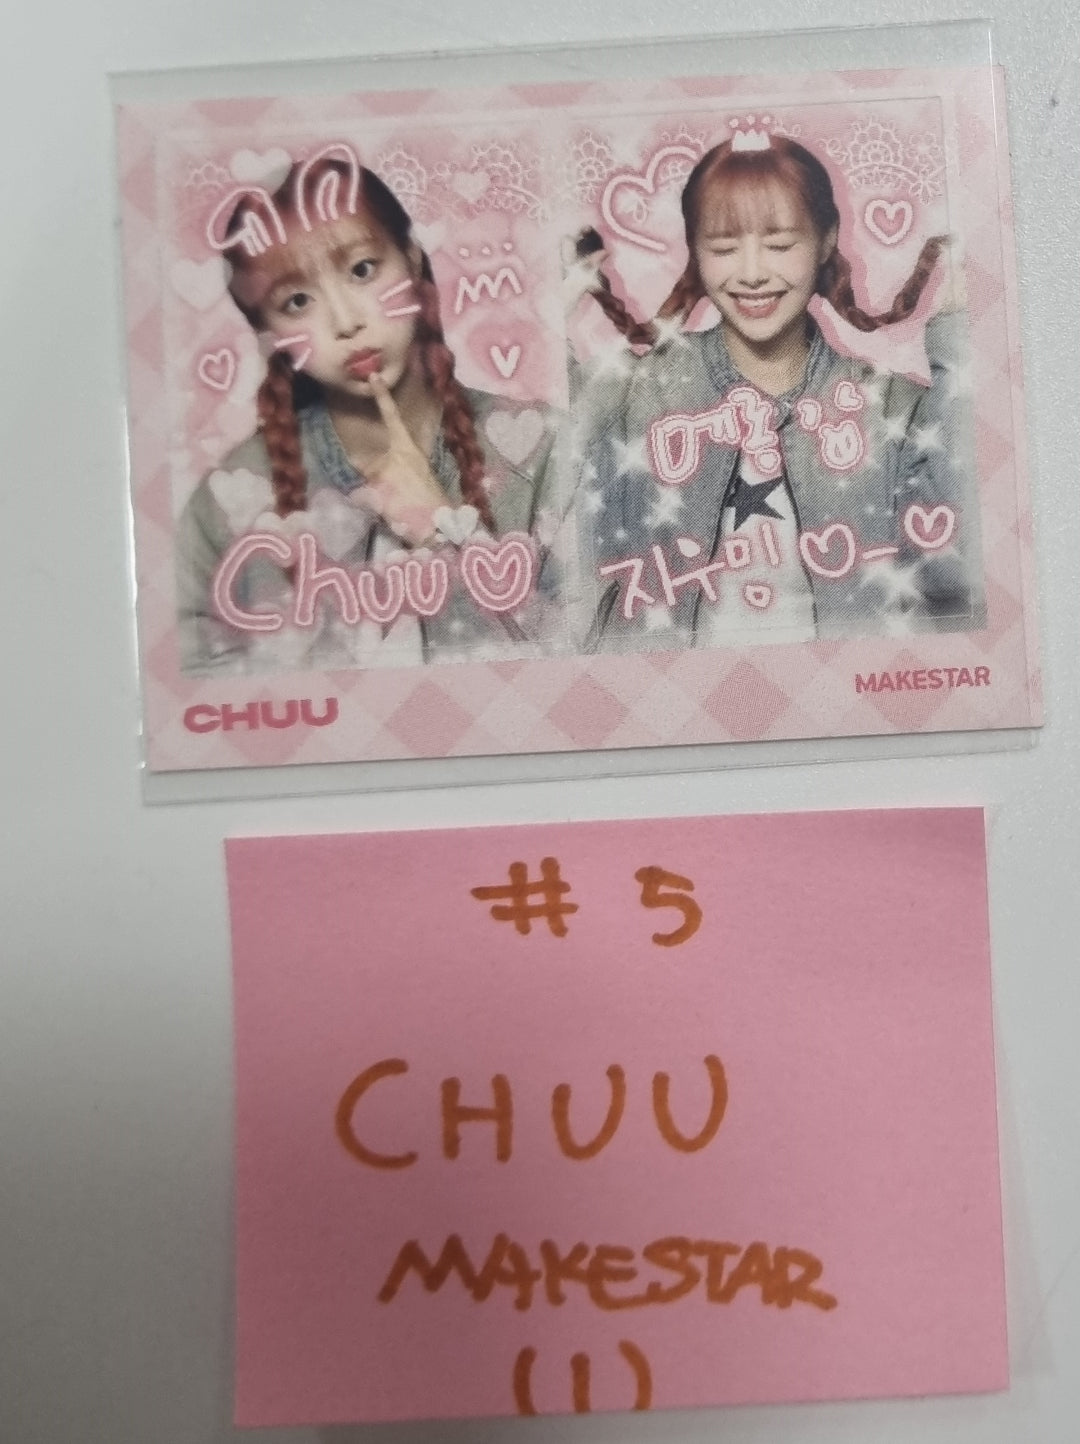 CHUU「Howl」 - Makestar ファンサイン会フォトカード、2カット写真第5弾 [23.11.21]